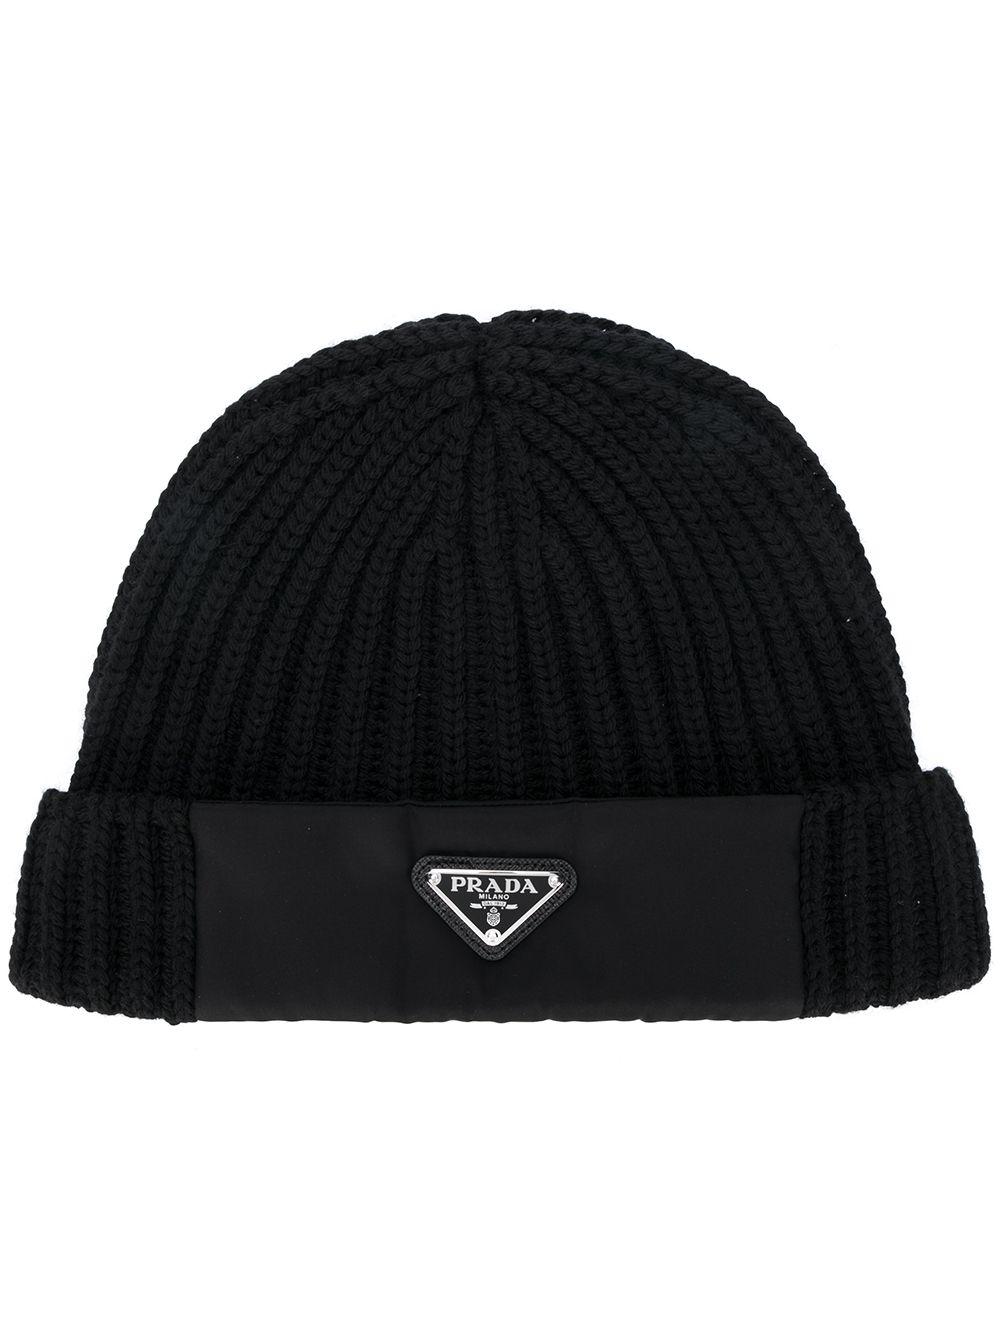 Prada Wool Logo Patch Rib-knit Beanie Hat in Black for Men - Lyst